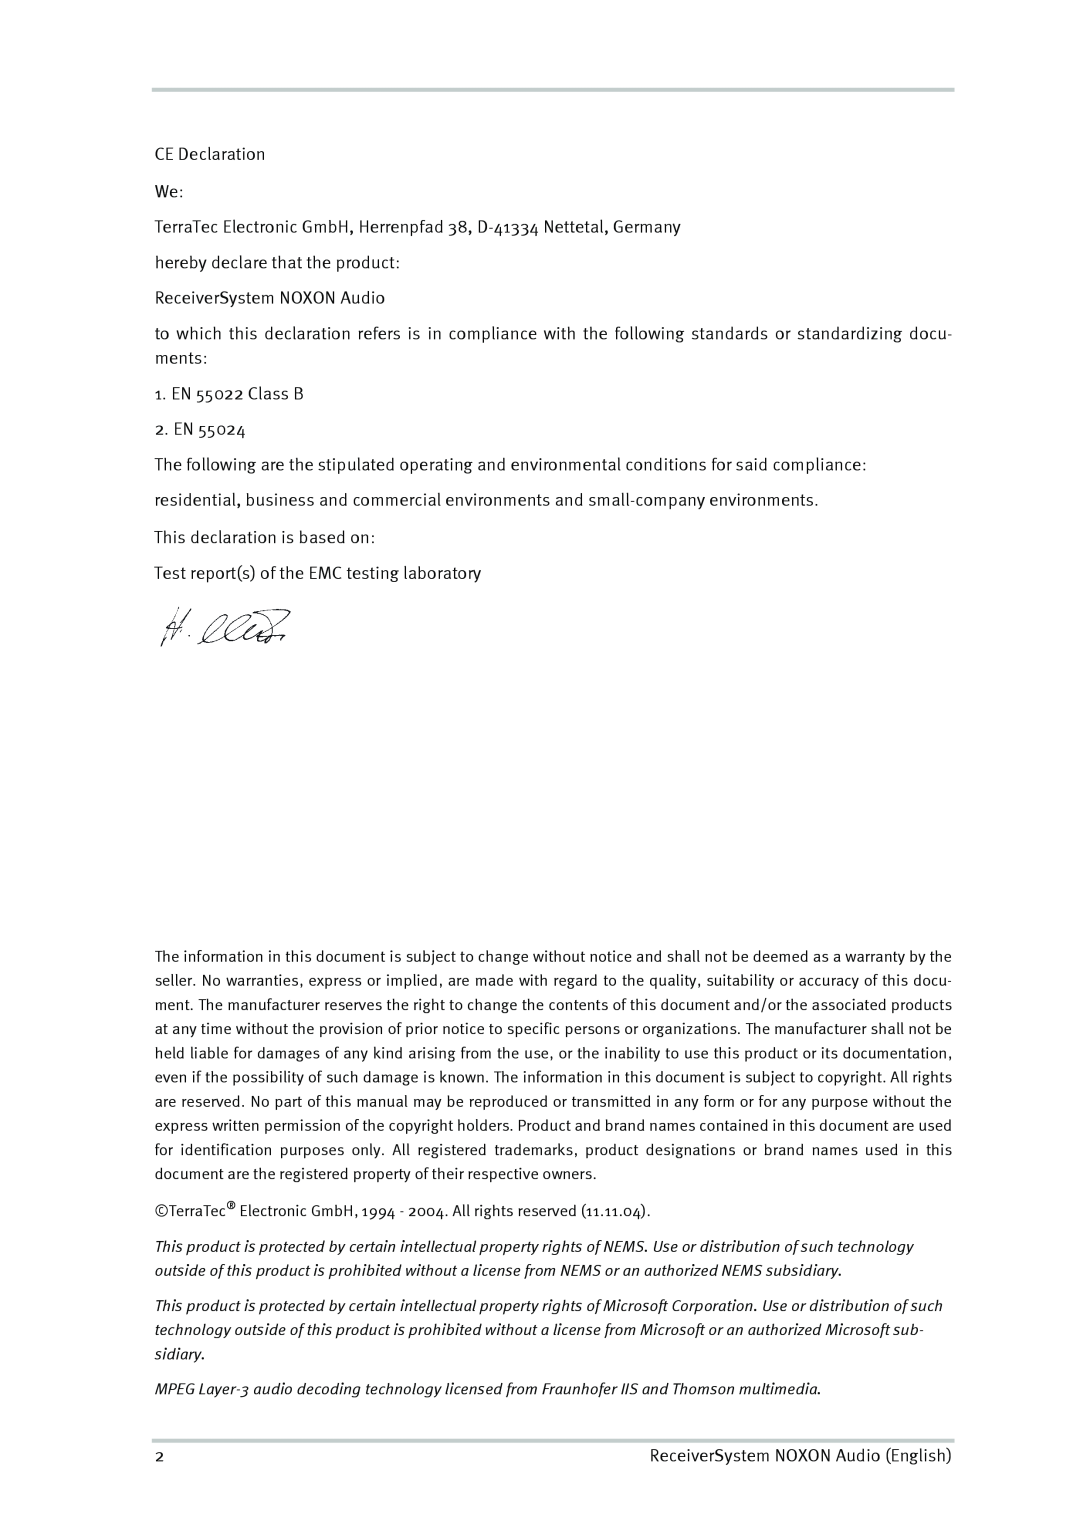 TerraTec manual CE Declaration We, ReceiverSystem NOXON Audio, 1.EN 55022 Class B 2.EN, This declaration is based on 